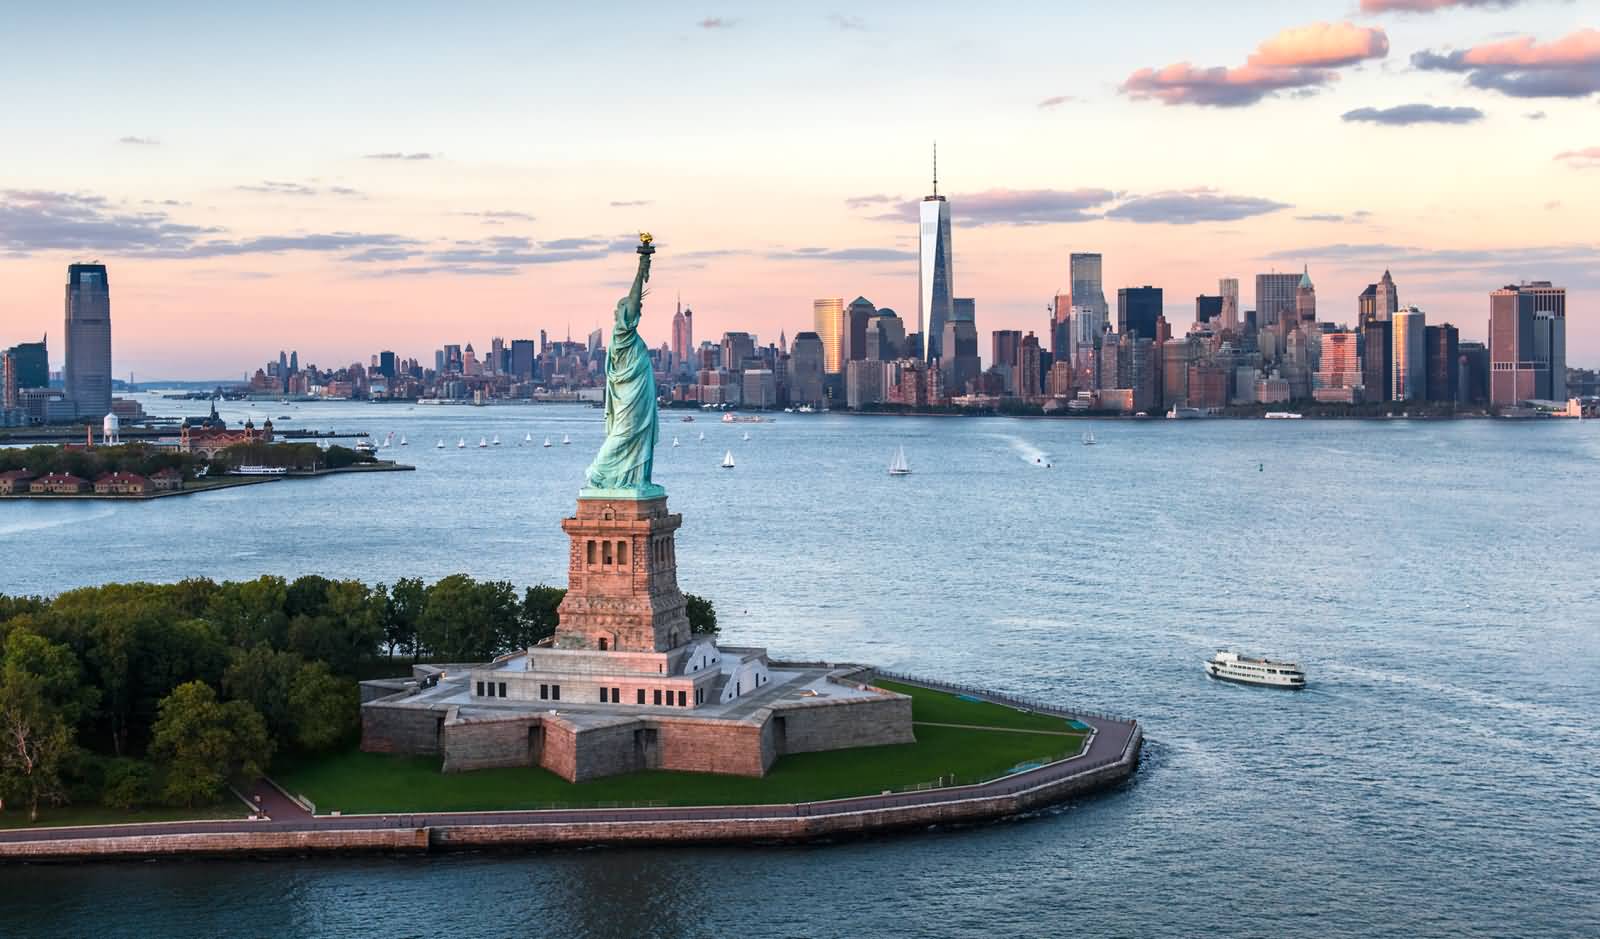 Statue of Liberty And Hudson River At Dawn